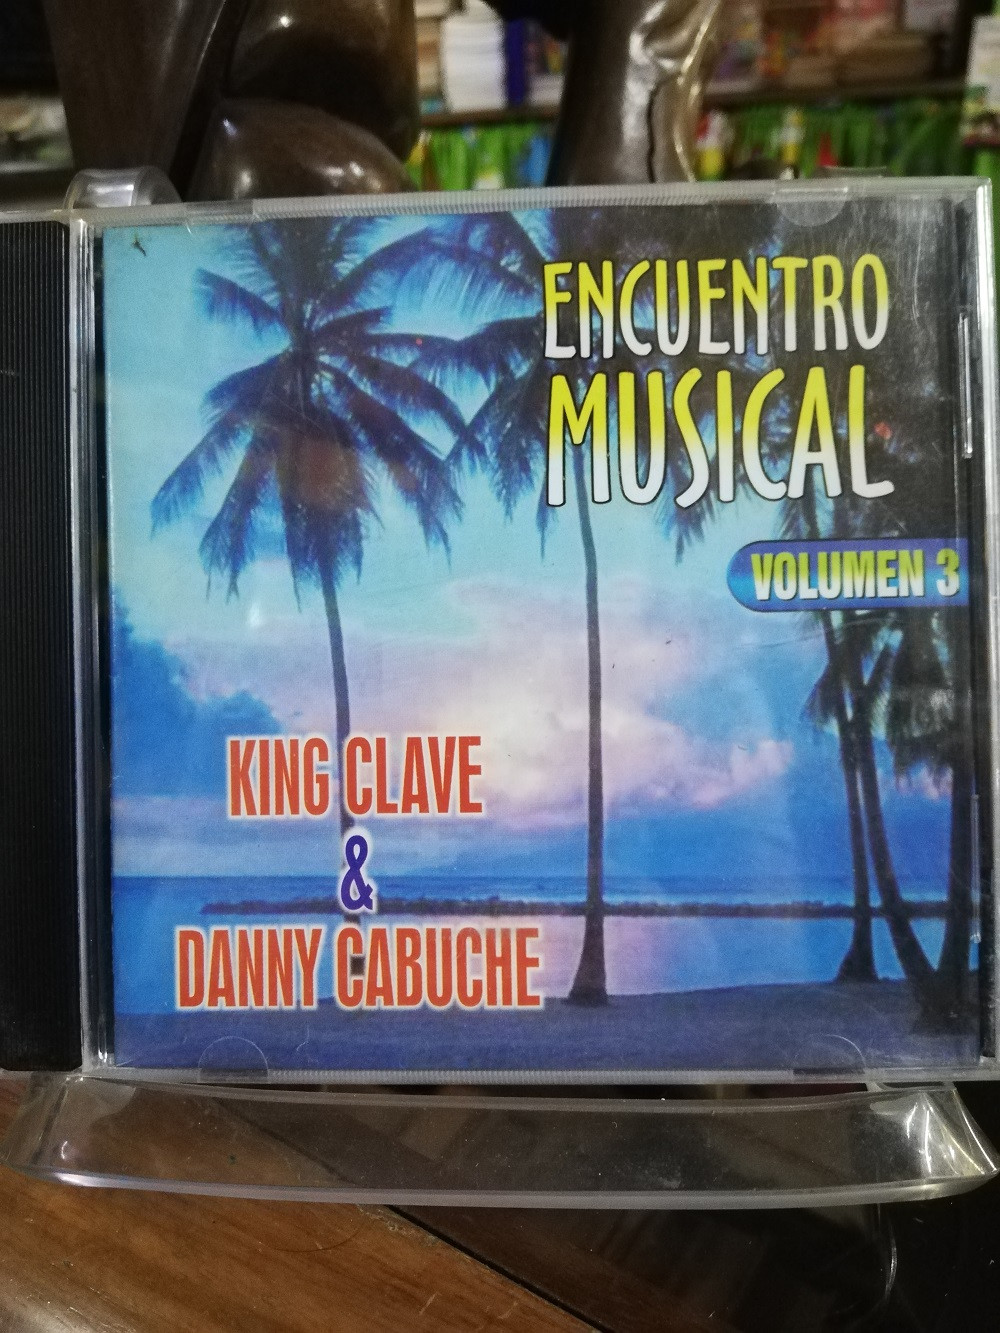 Imagen CD KING CLAVE & DANNY CABUCHE - ENCUENTRO MUSICAL VOL. 3 1